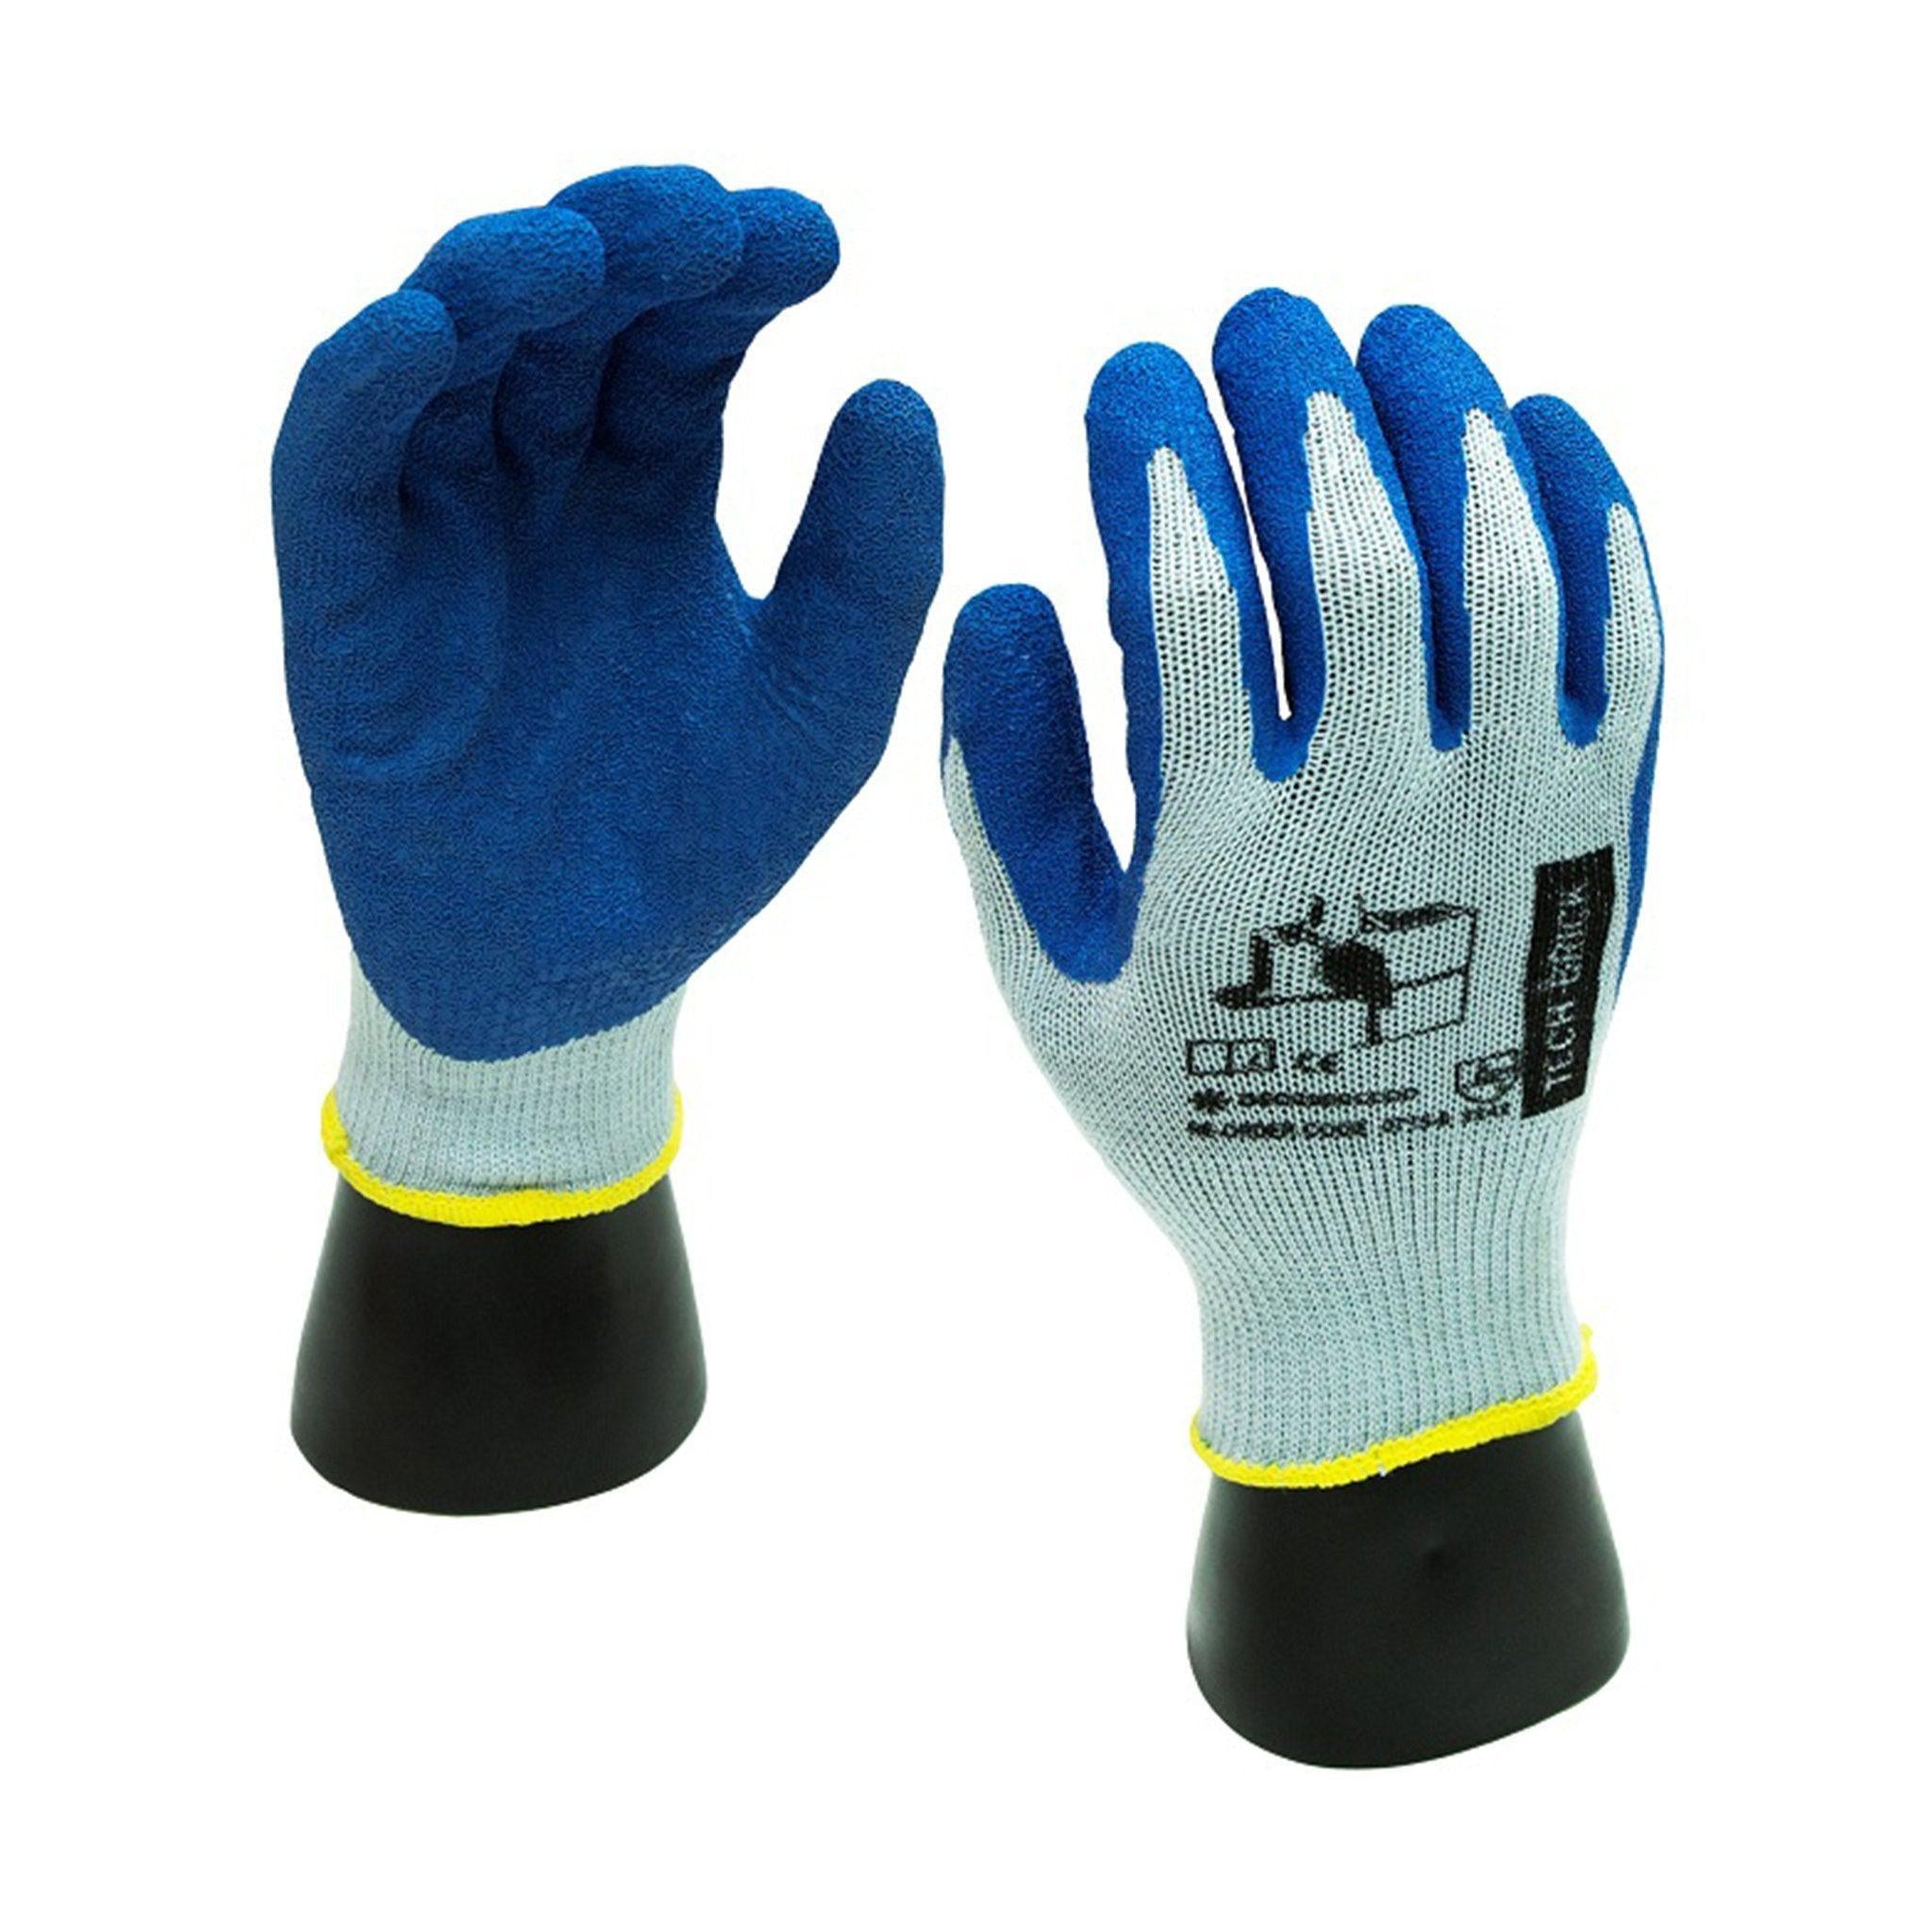 Tech-Brick Brickies Gloves (12 Pack)